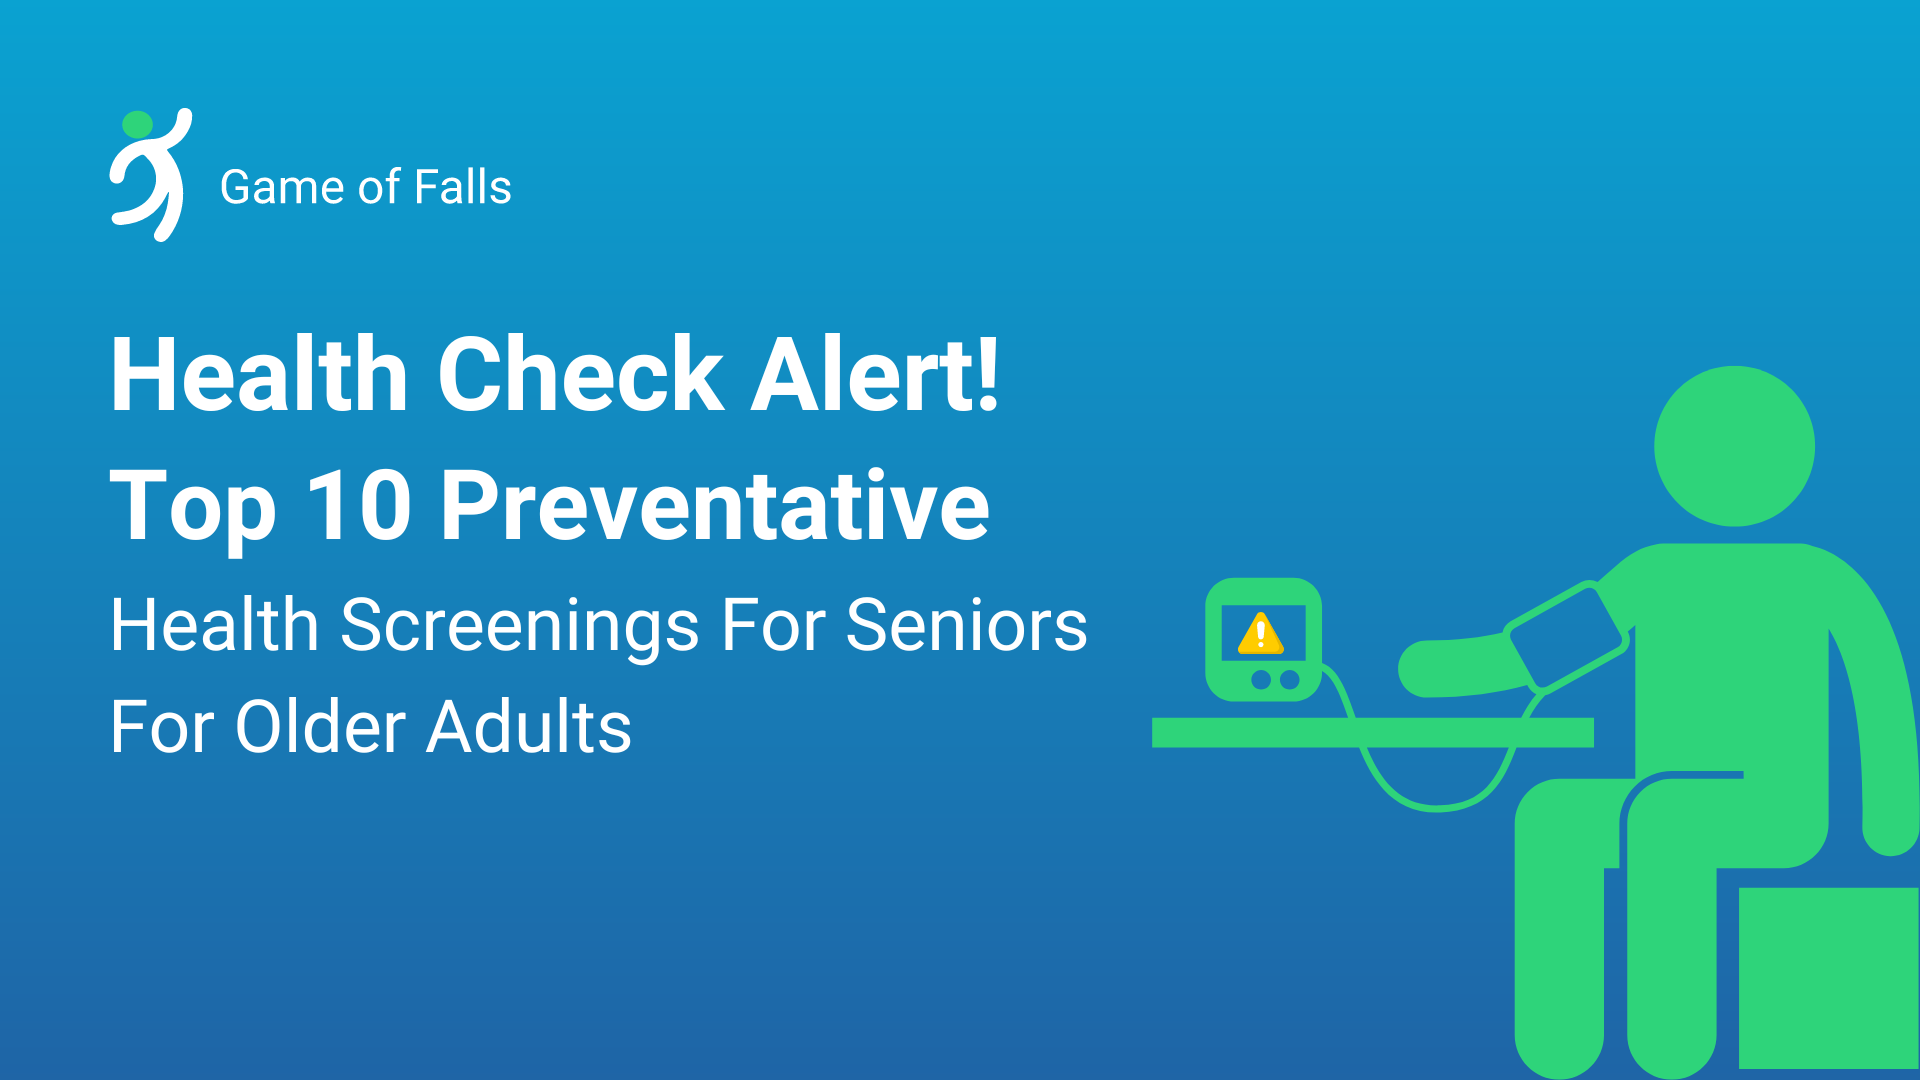 Top 10 Preventative Health Screenings for Seniors for Older Adults